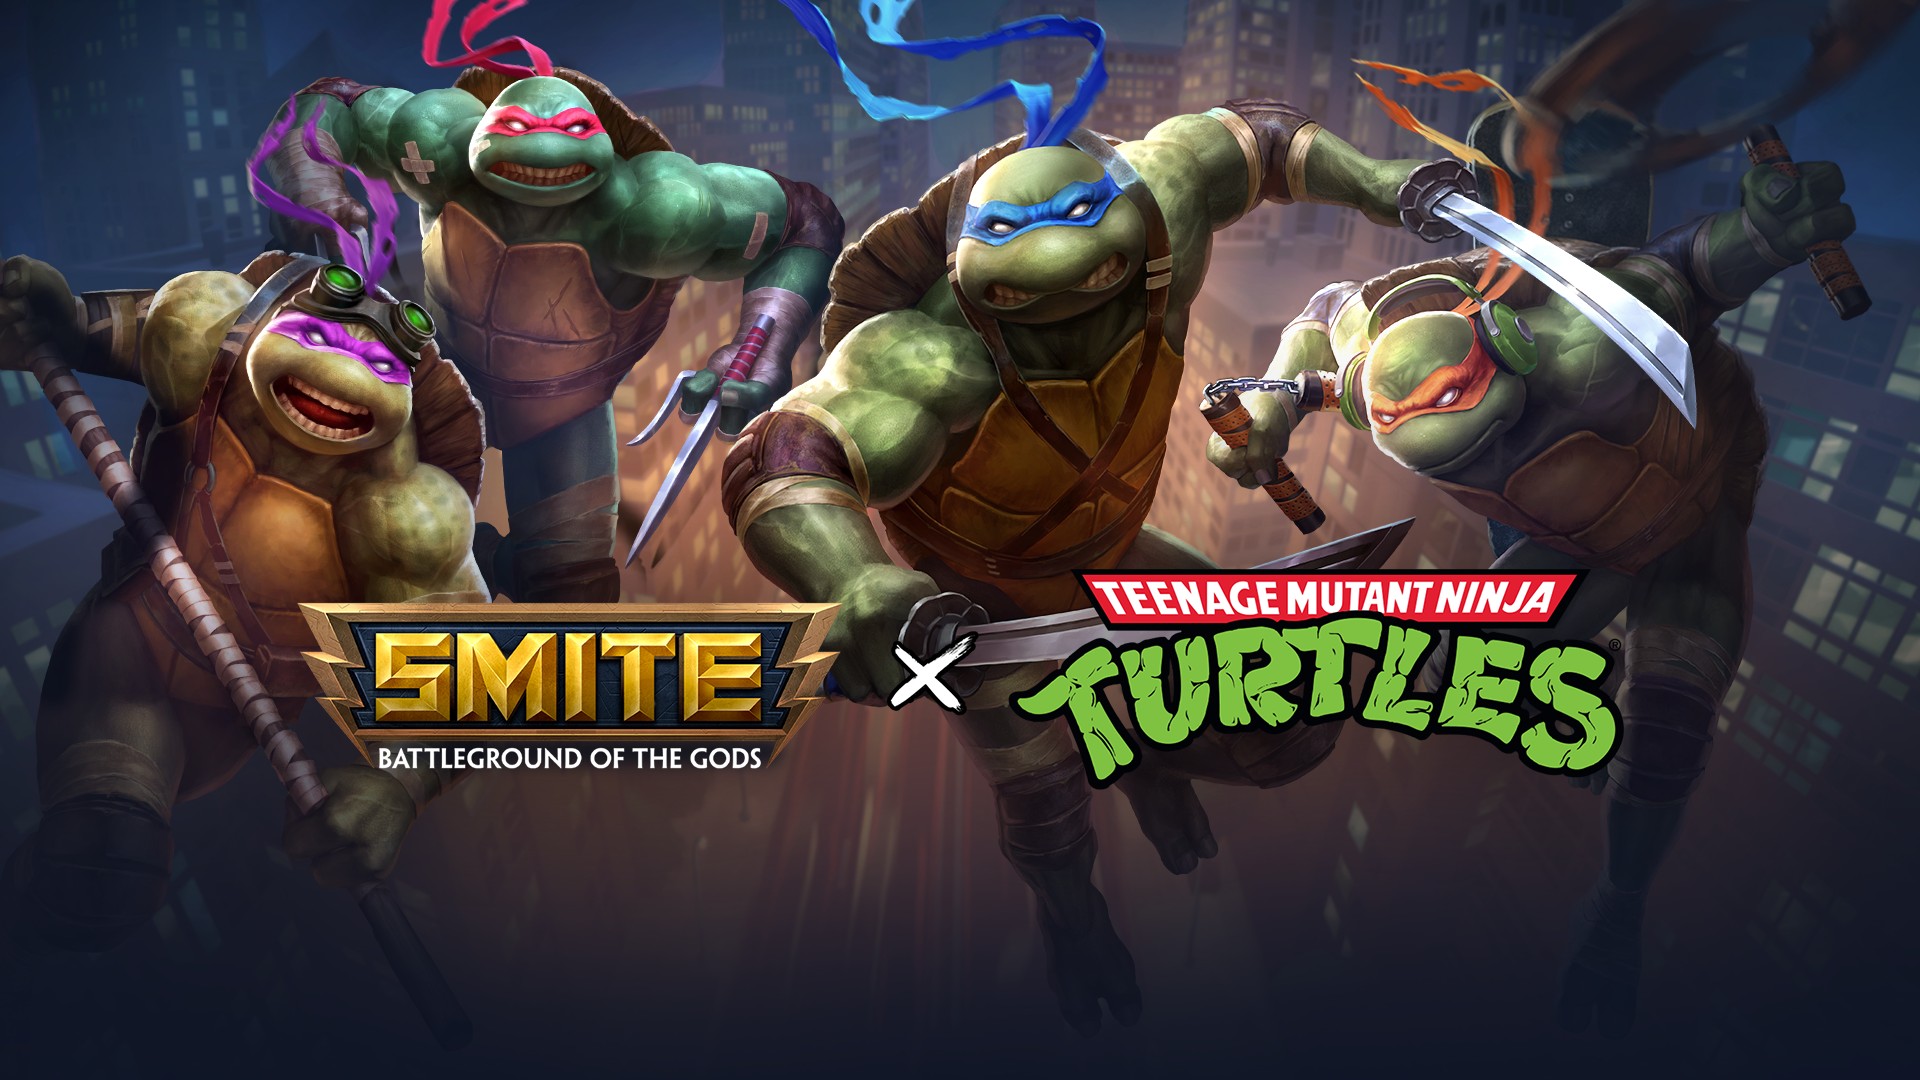 Cowabunga Teenage Mutant Ninja Turtles Join The Battleground Of The